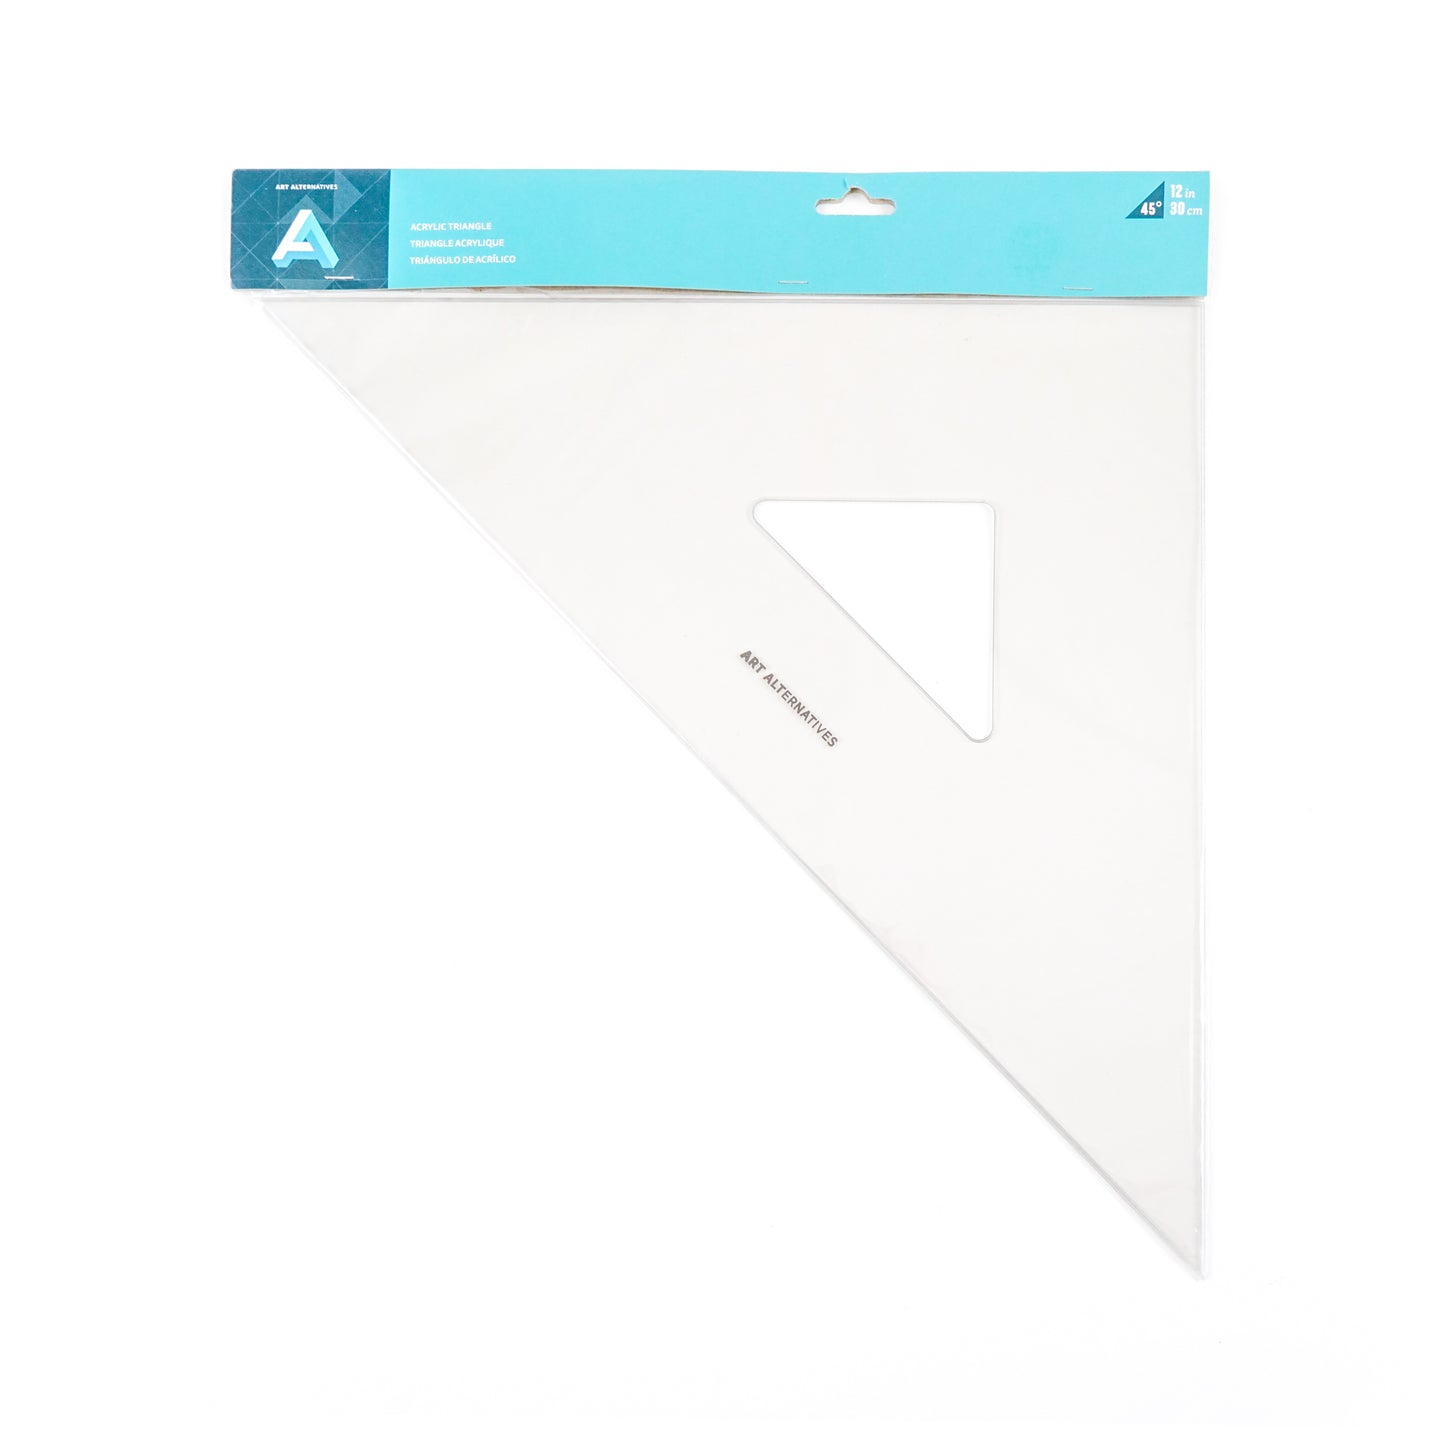 Art Alternatives Triangle - 45/45/90 Degree with Beveled Inking Edge - 12-inch by Art Alternatives - K. A. Artist Shop